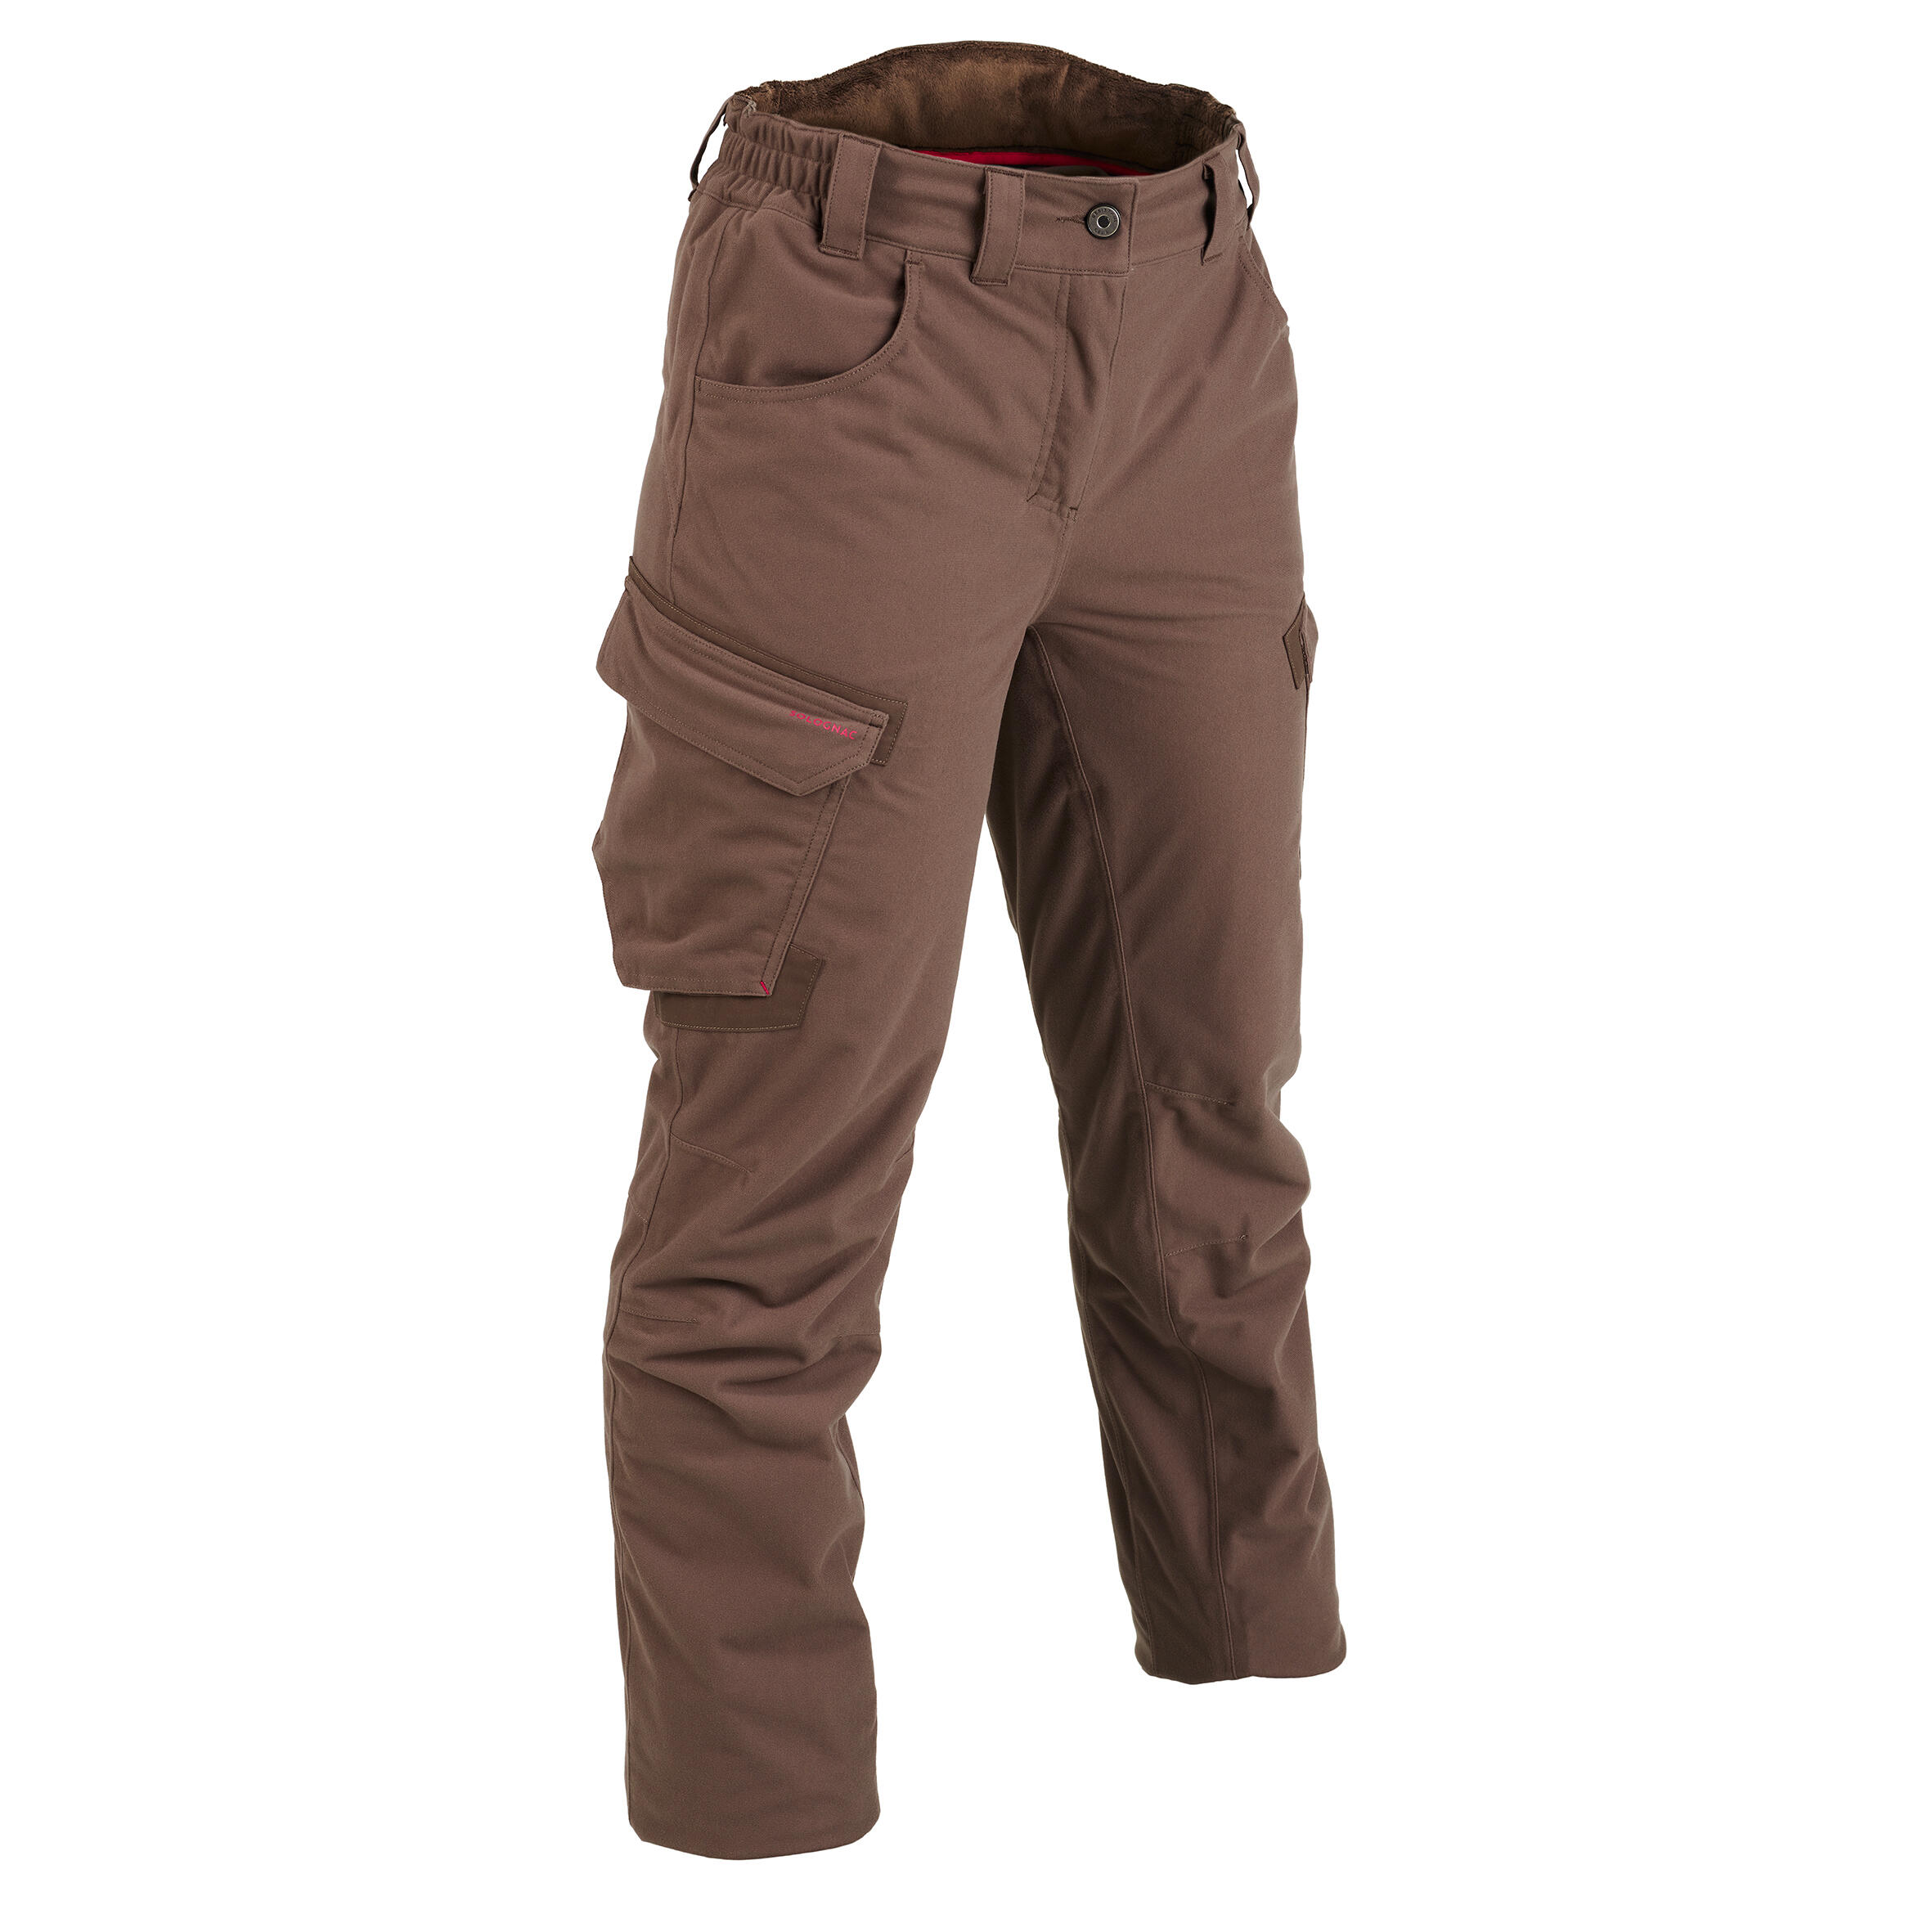 Pantalon 500 Impermeabil Călduros Maro Damă 500